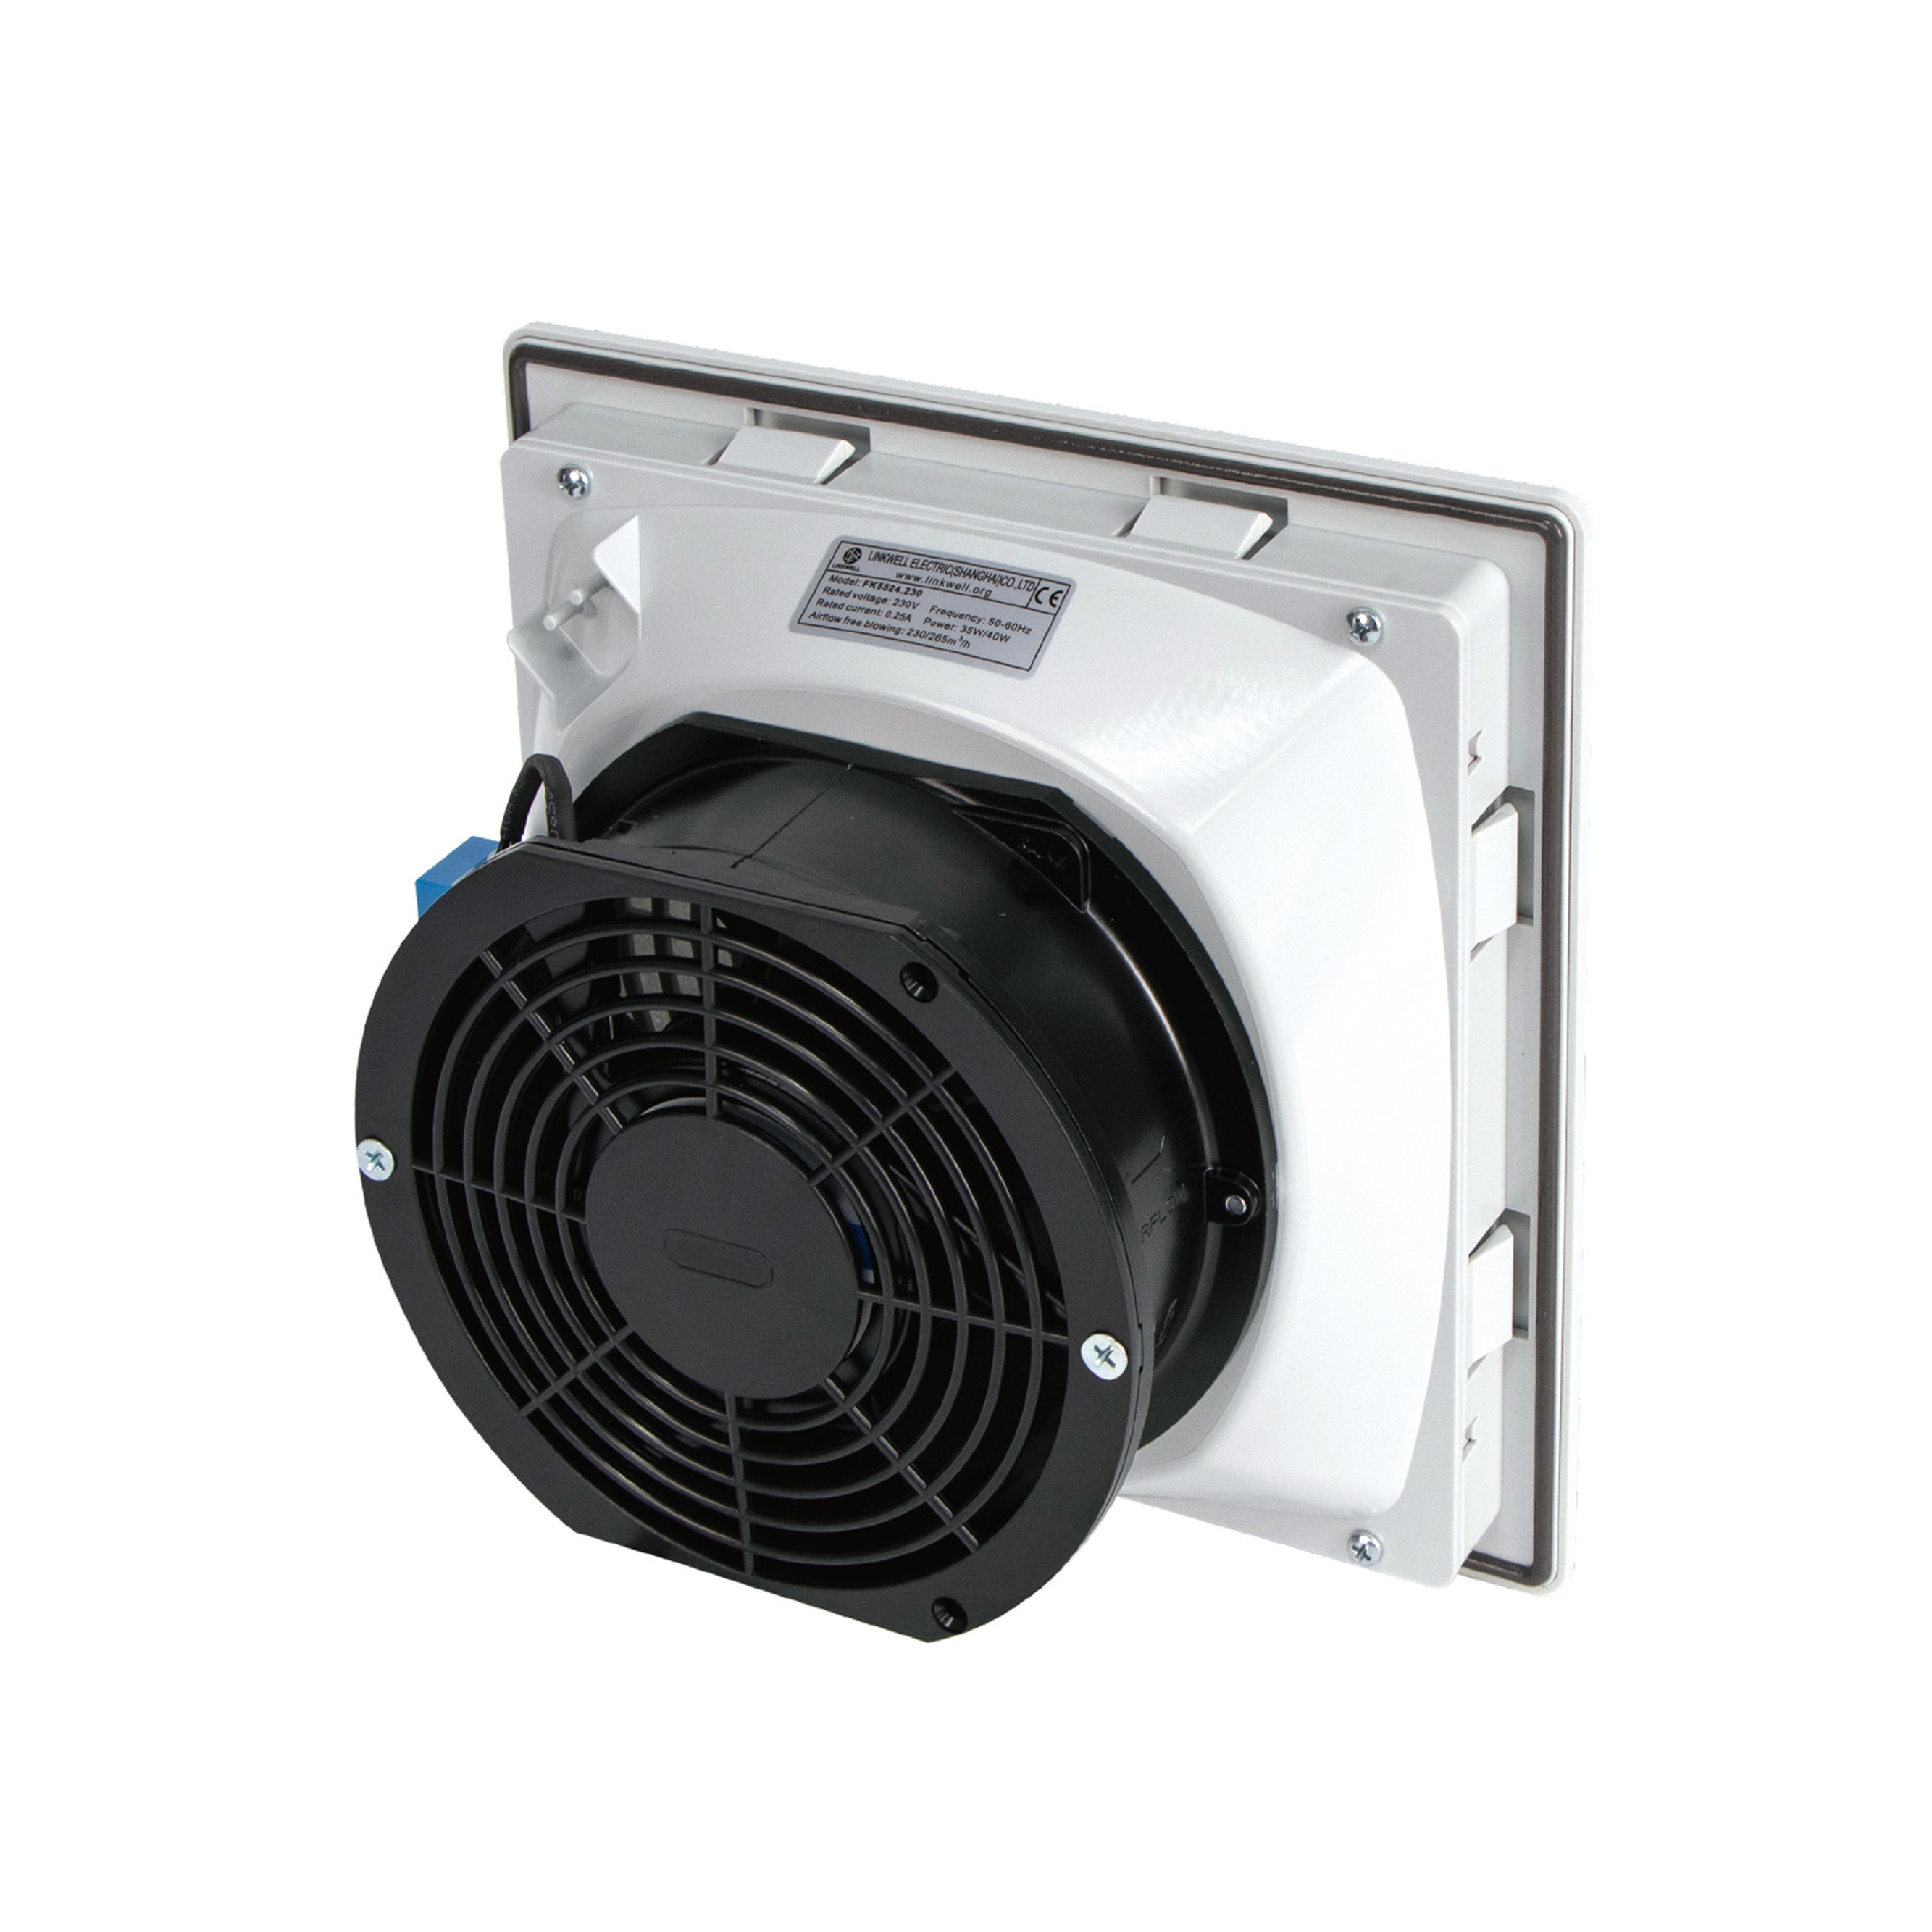 FK5524-Multi-specification filter cooling exhaust fan